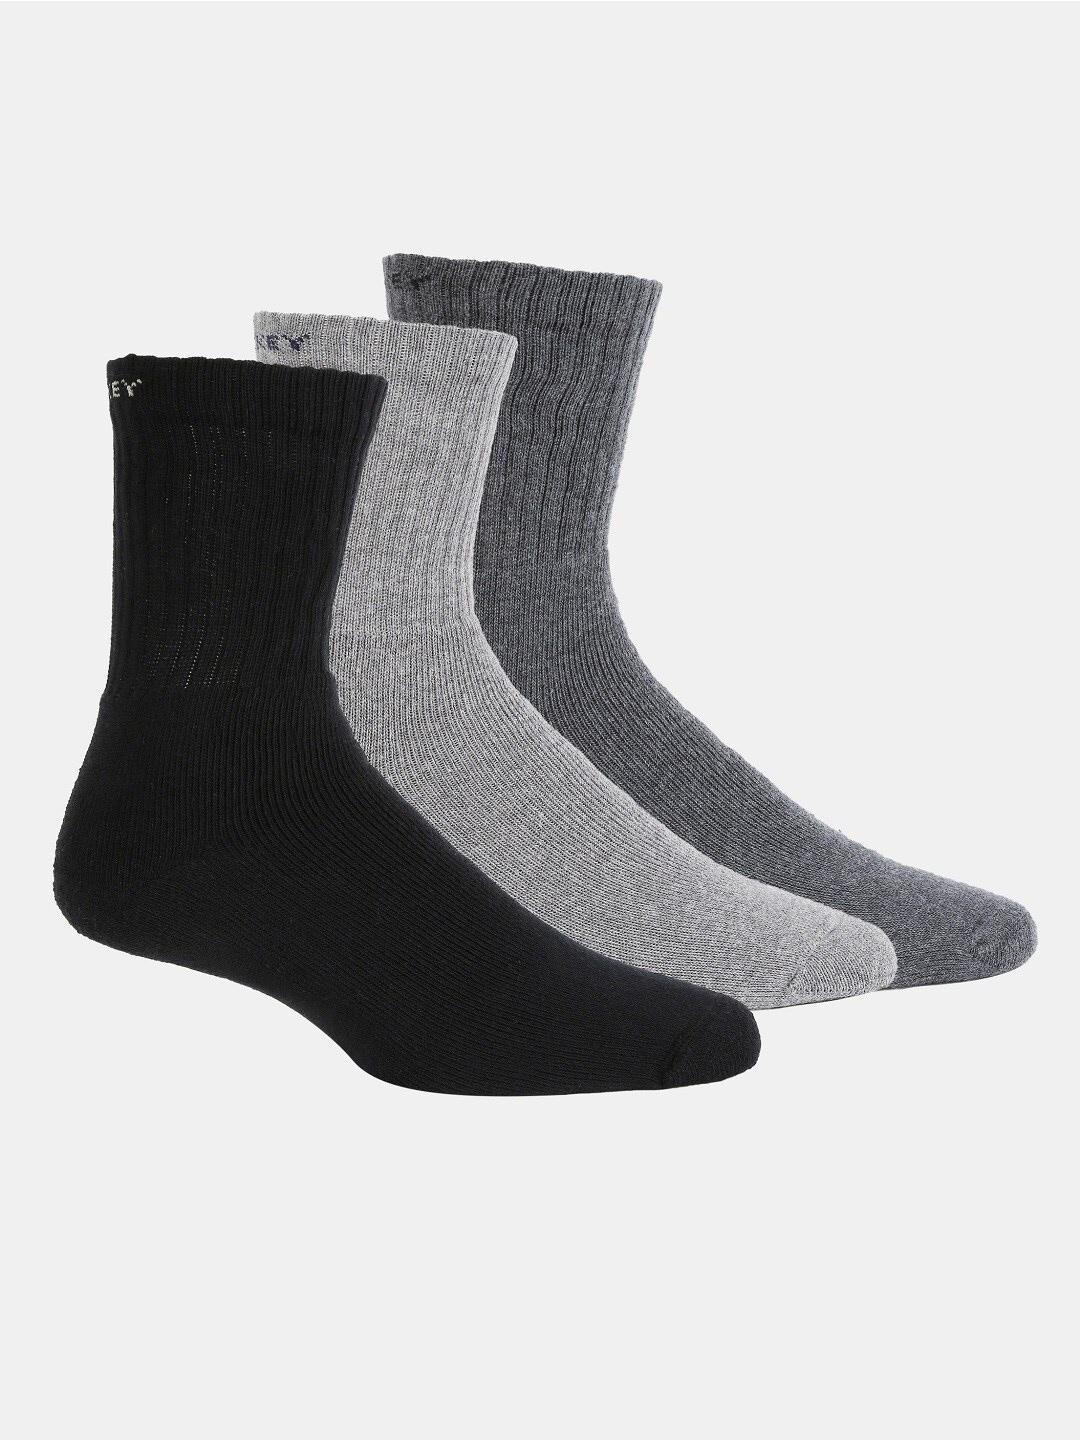 Jockey Men Pack of 3  Black & Grey Solid Cotton Calf Length Socks